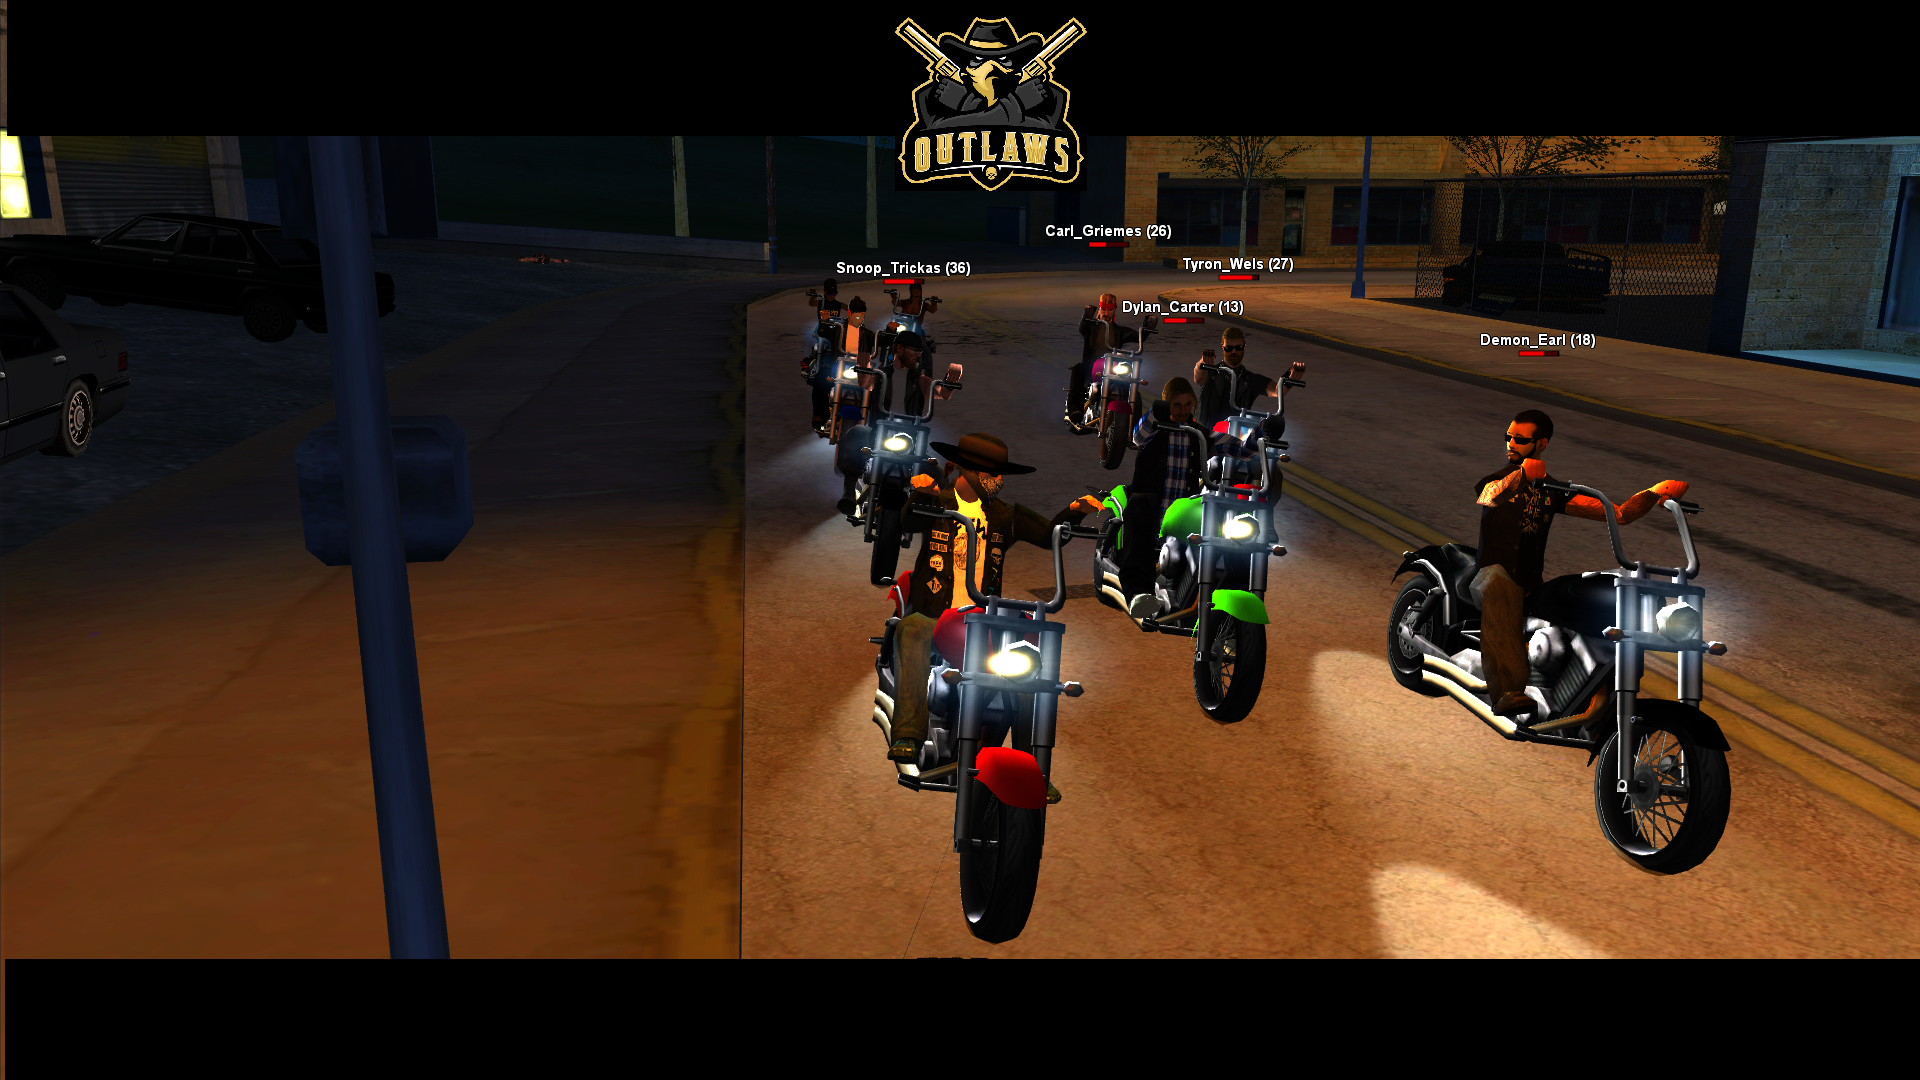 OAC moto biker club Yqop